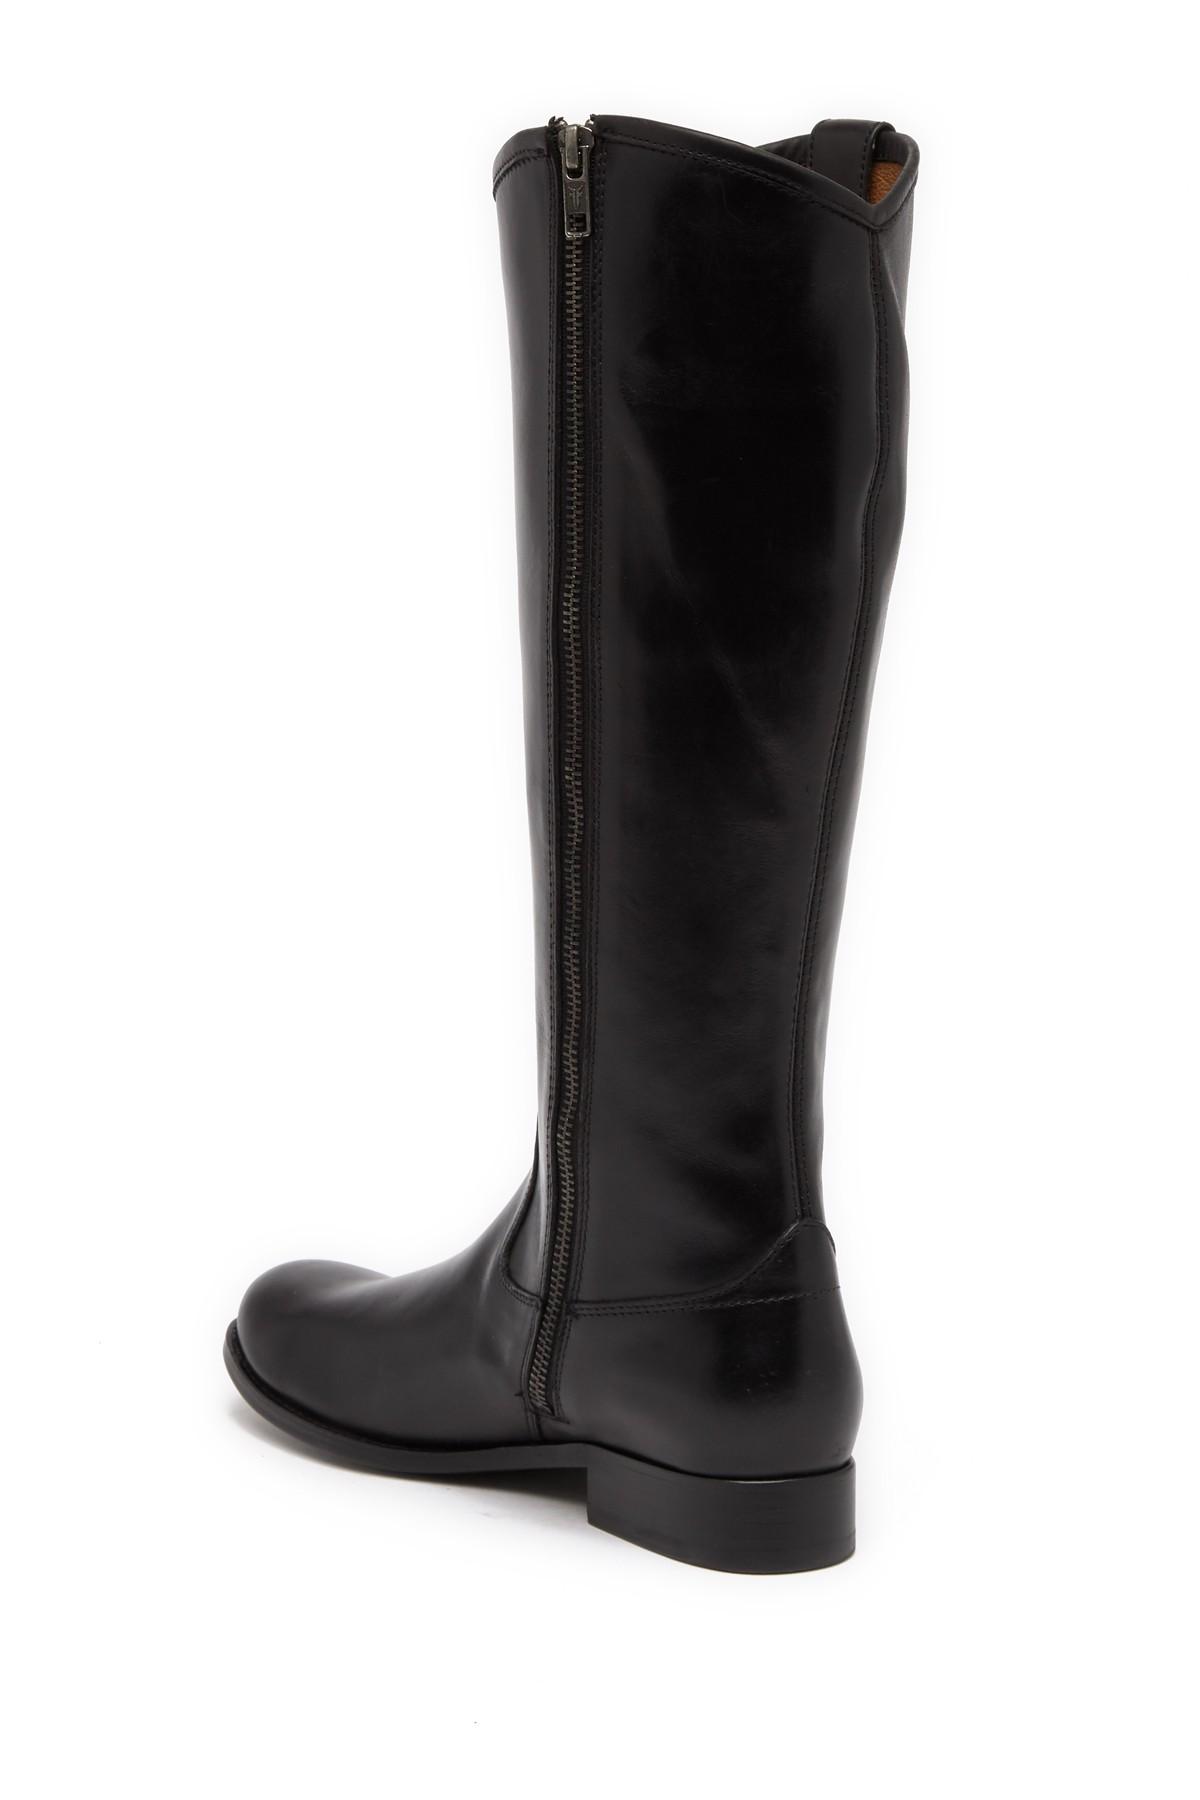 Frye Melissa Button Inside Zip Leather Boot in Black - Lyst